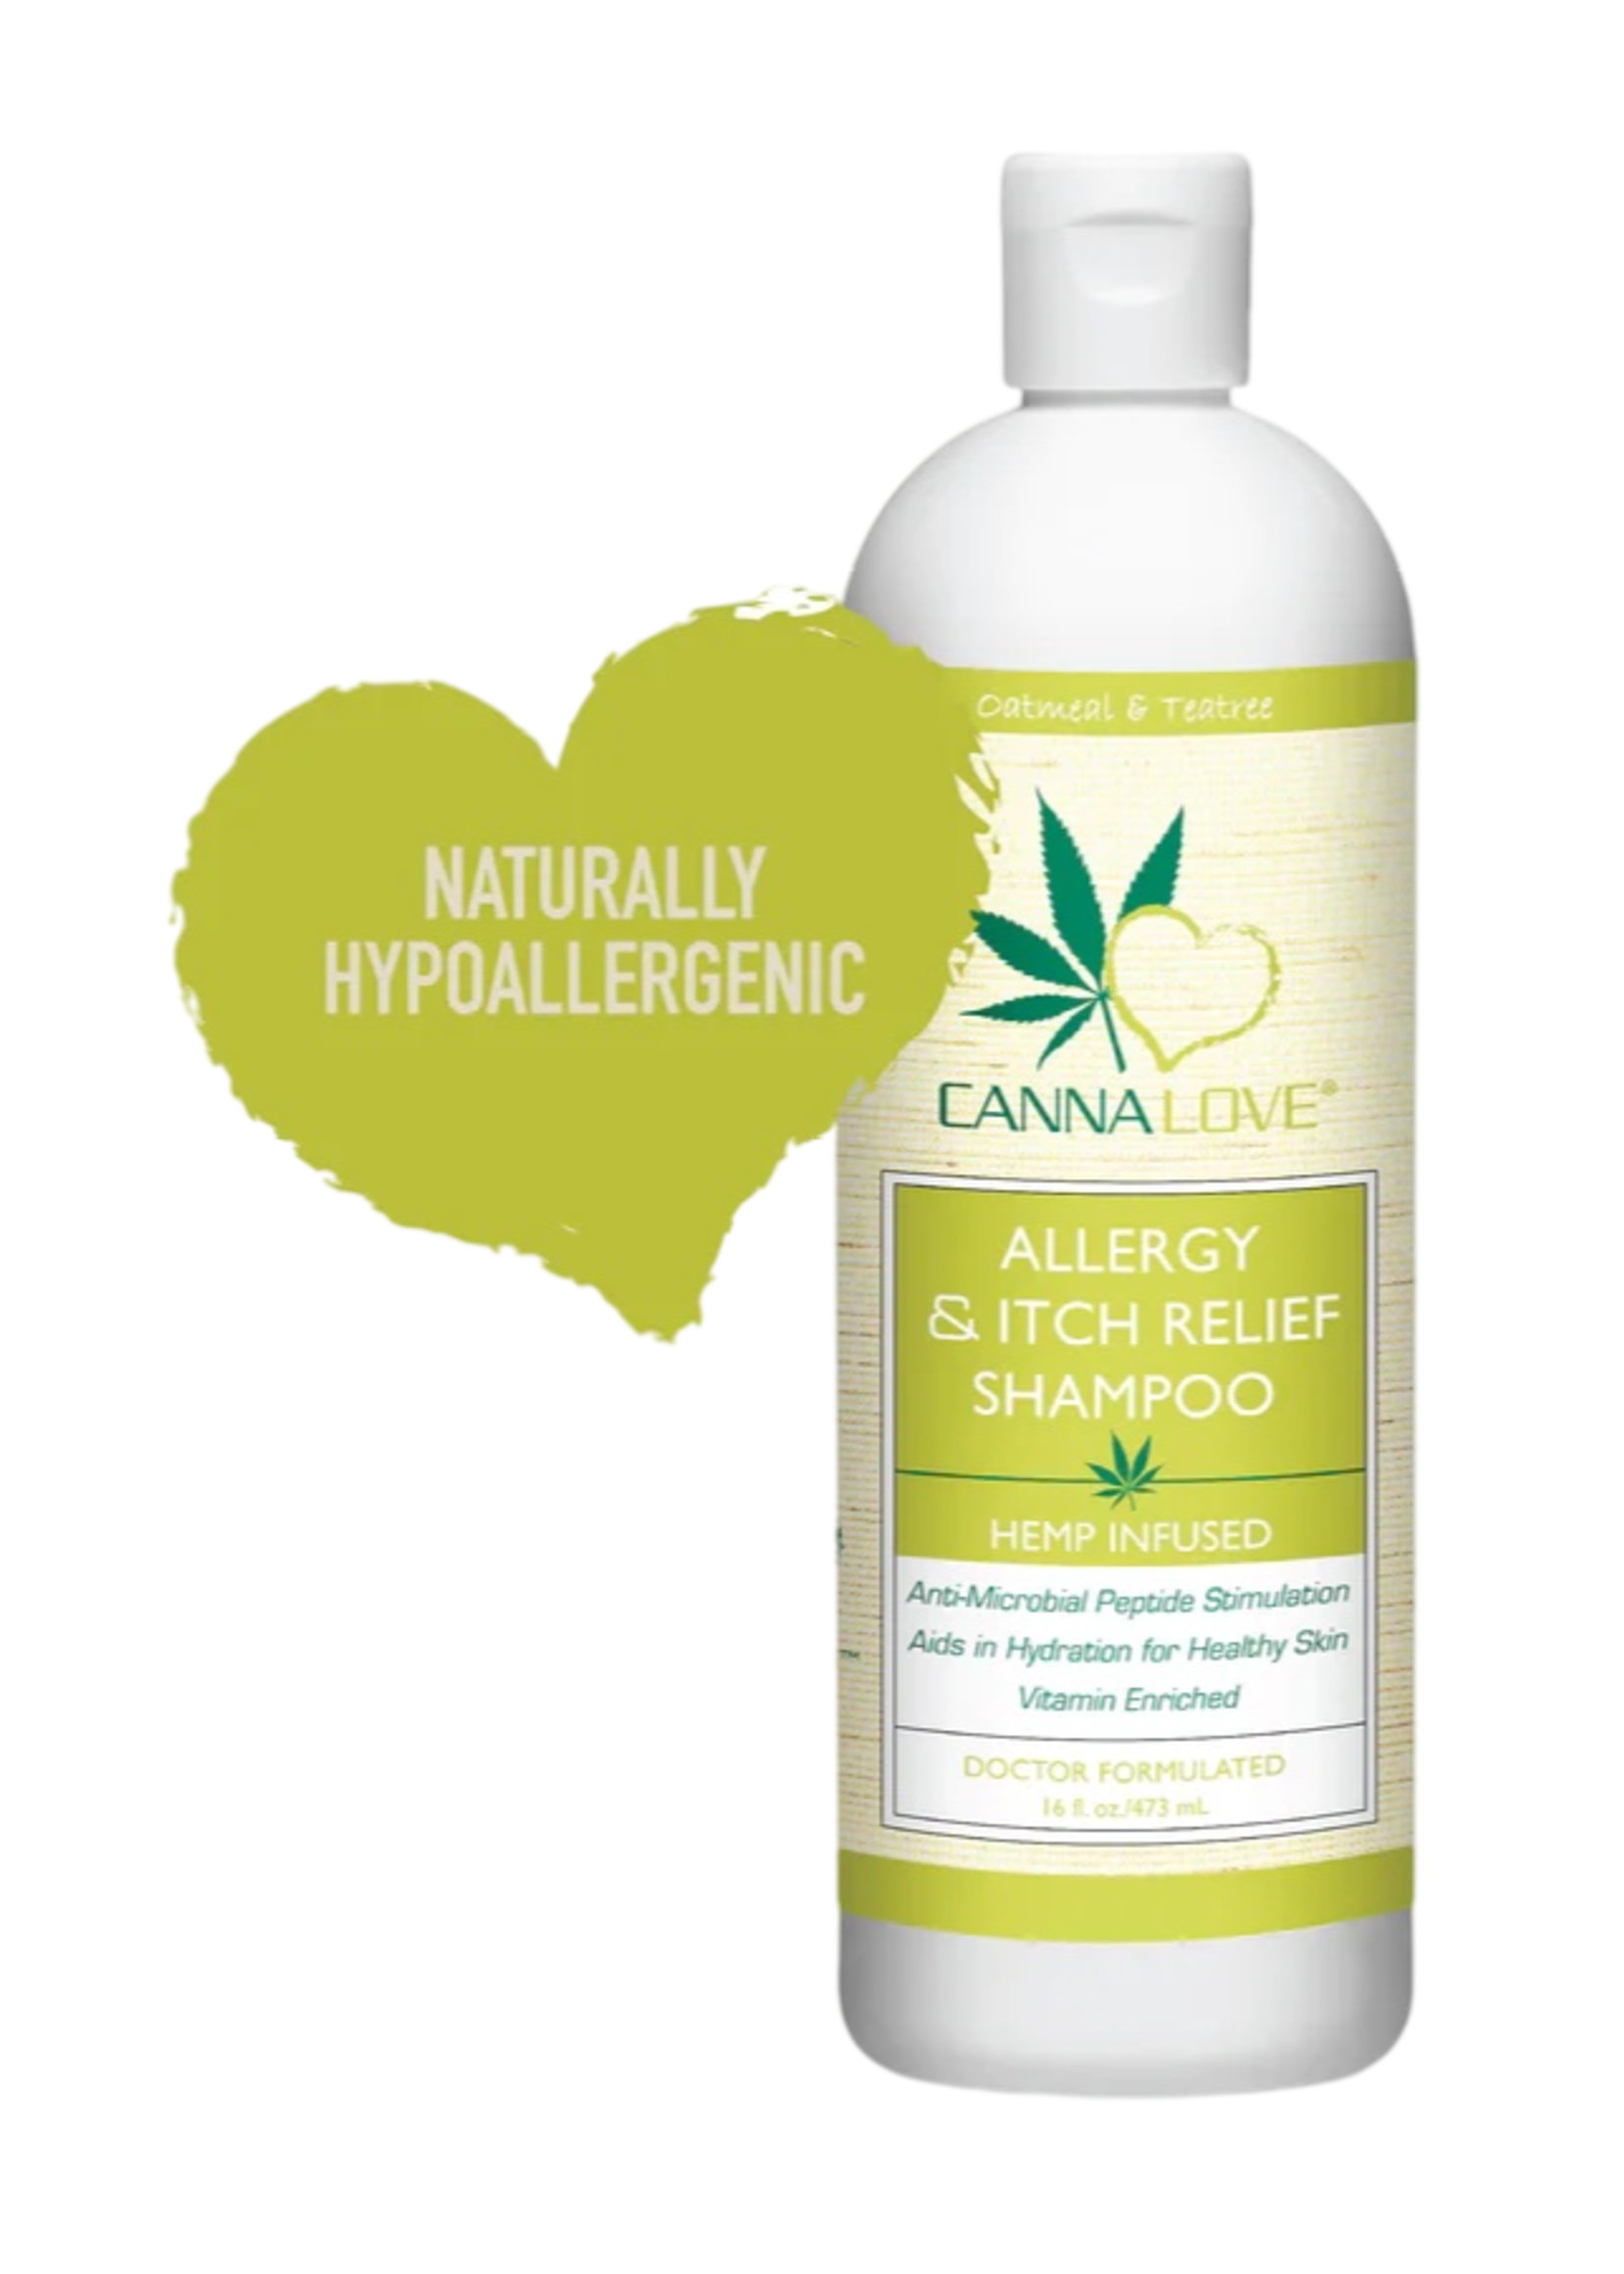 CannaLove Allergy & Itch Relief Shampoo